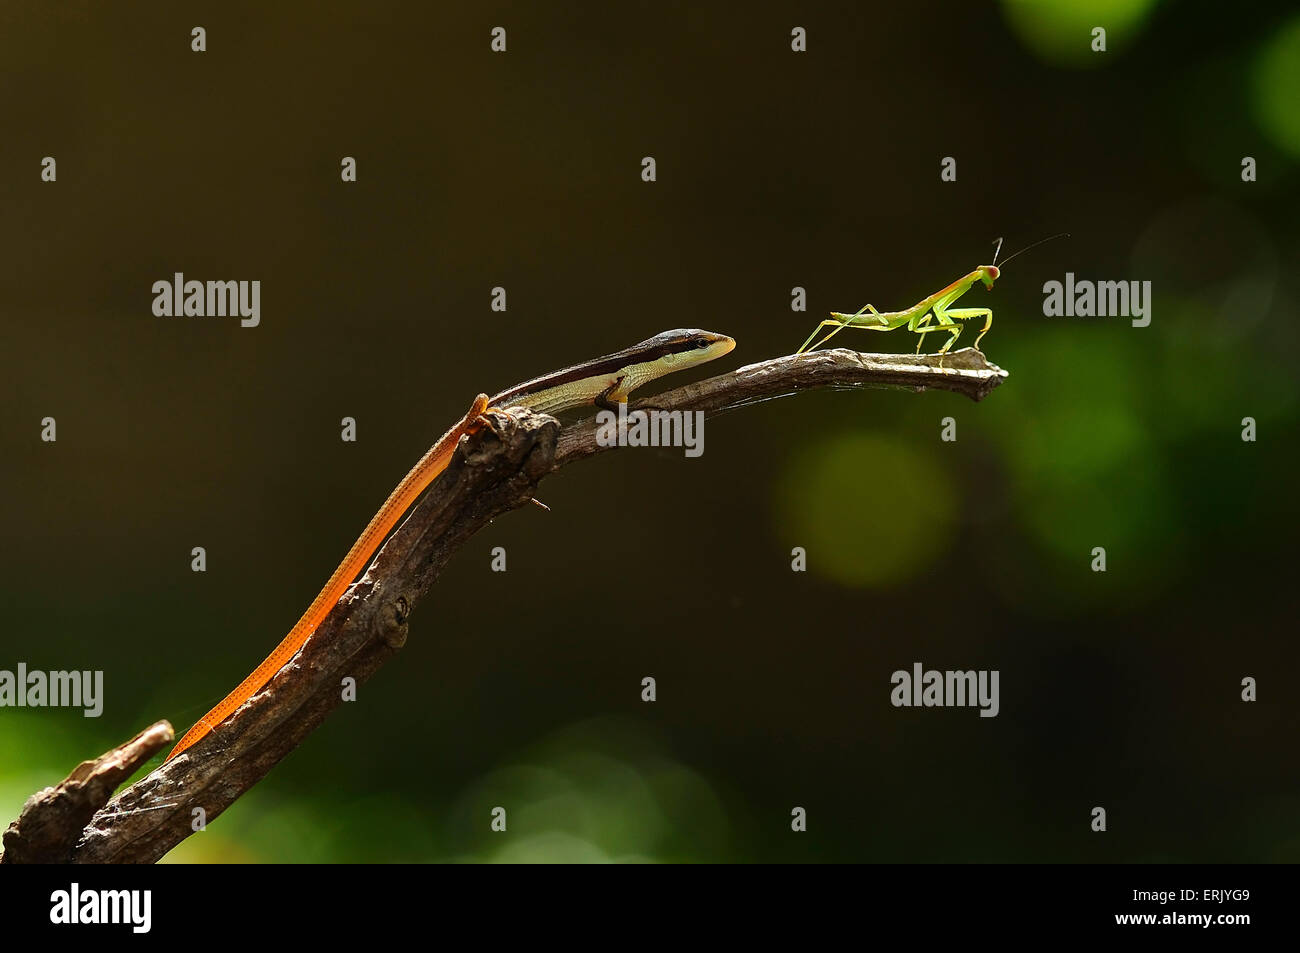 A lizard chasing a praying mantis on a branch Stock Photo